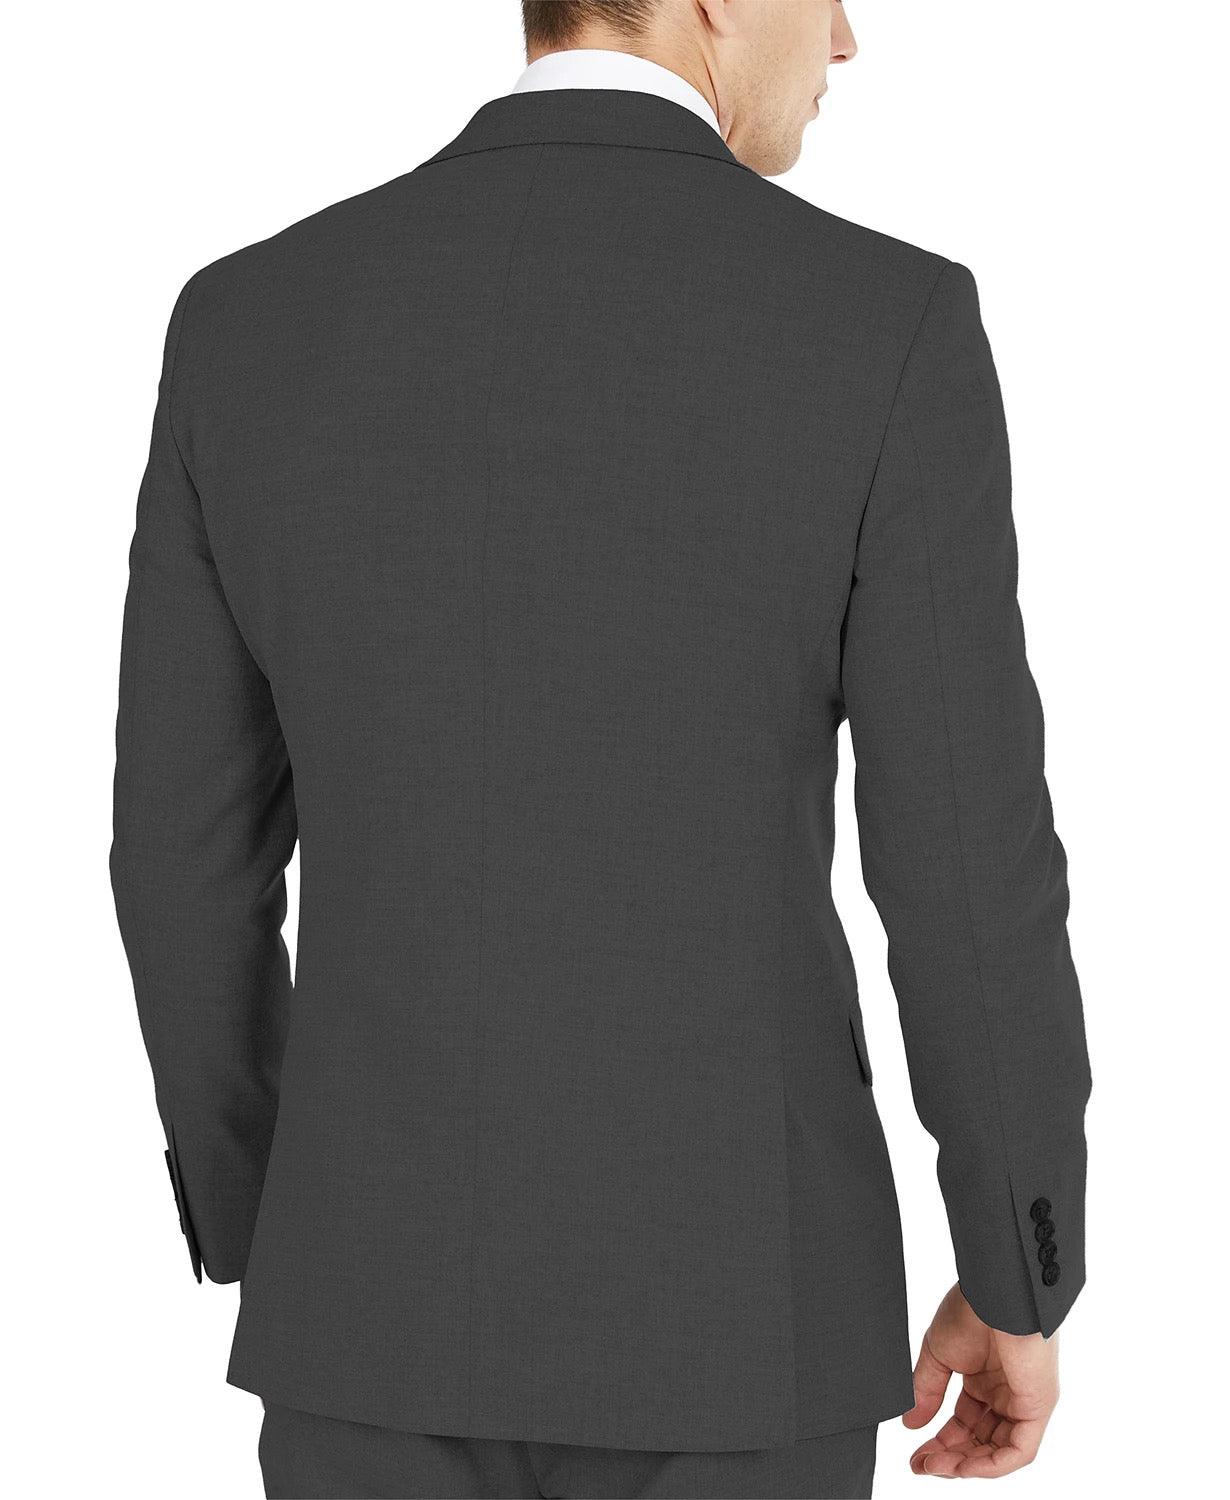 DKNY Men's Suit Jacket Charcoal 44L Modern-Fit Stretch / Two Button - Bristol Apparel Co